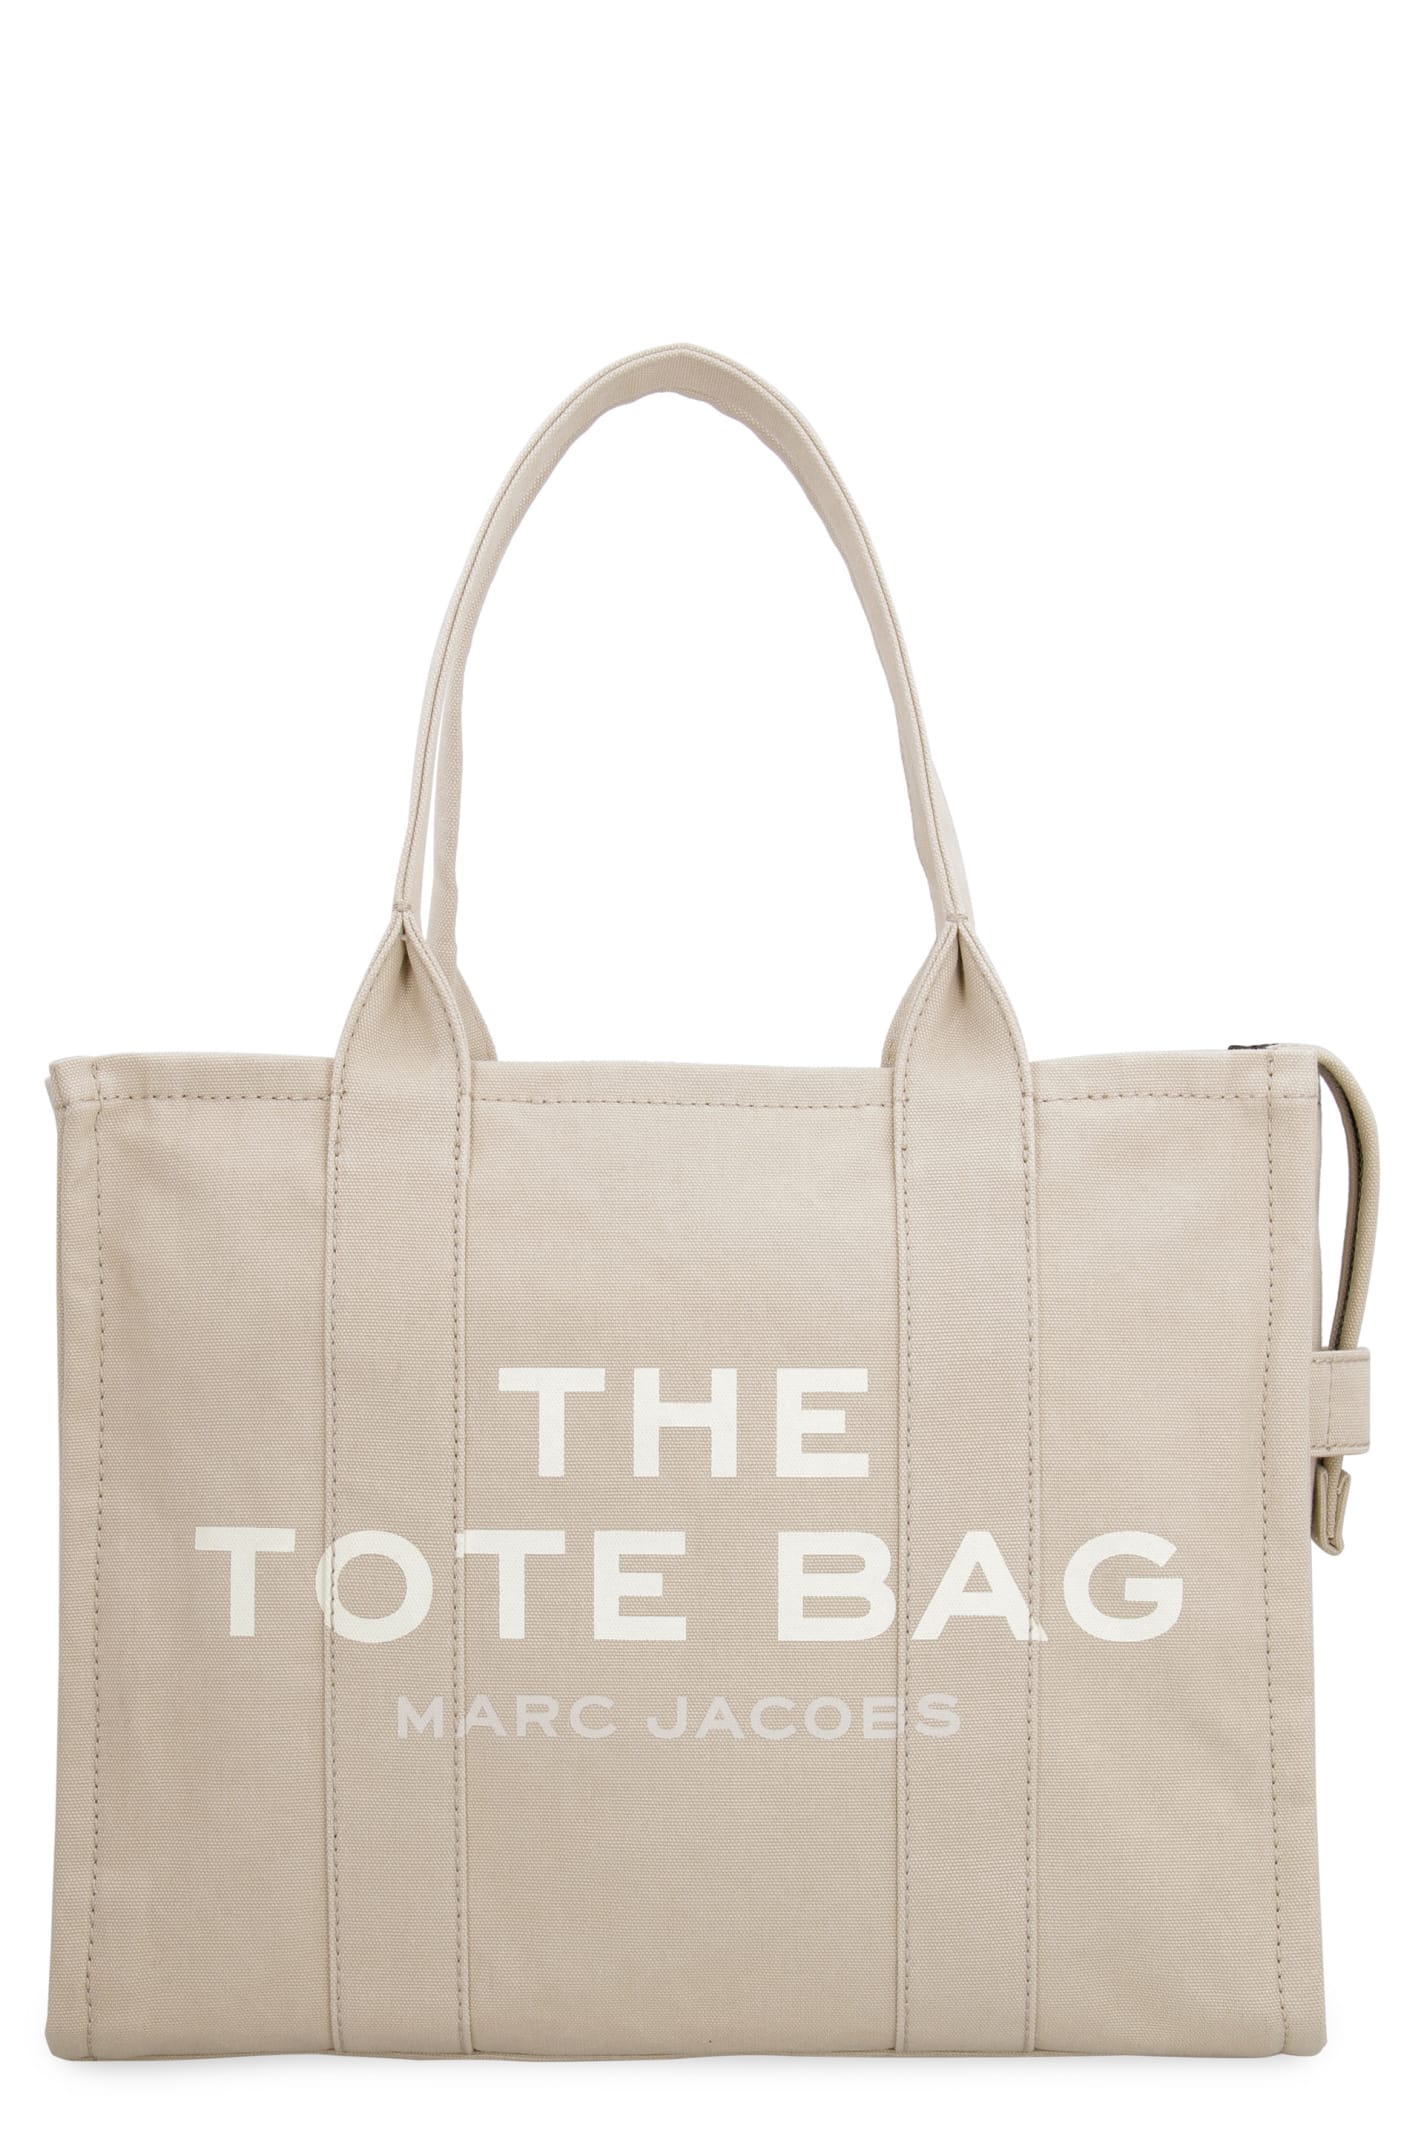 Marc Jacobs Tote Bags Handbags & Luggage :: Keweenaw Bay Indian Community